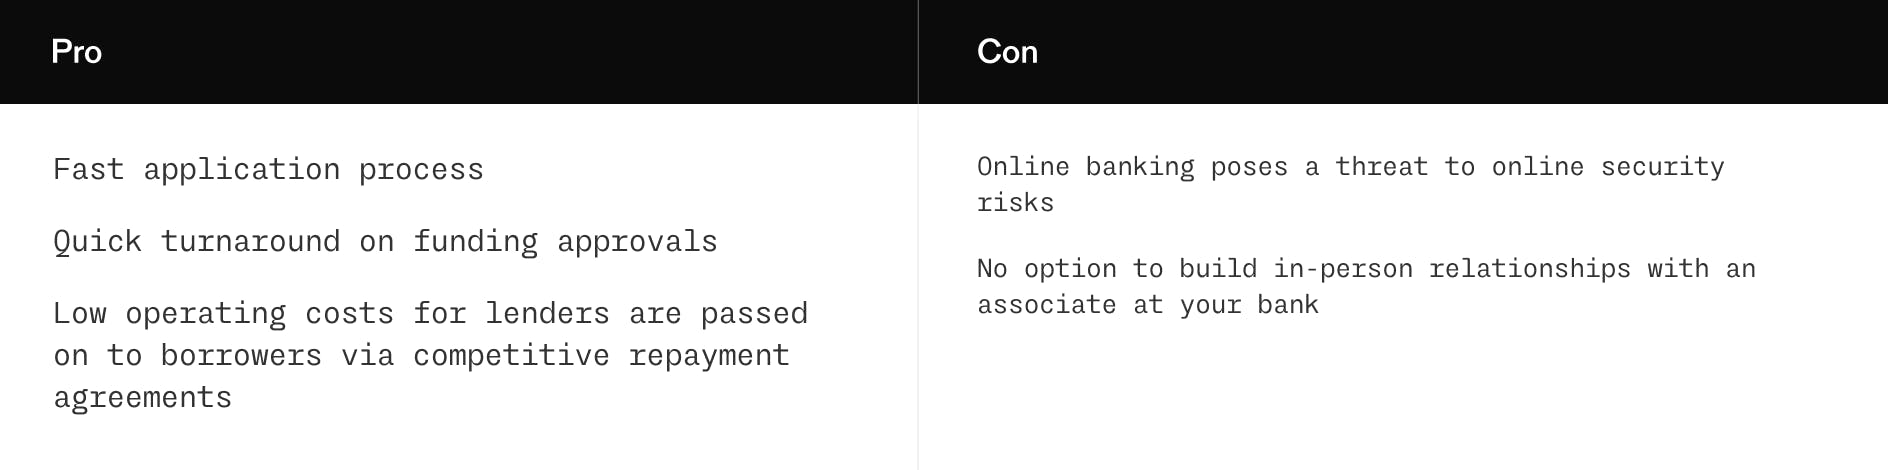 pros vs cons of online lending platforms